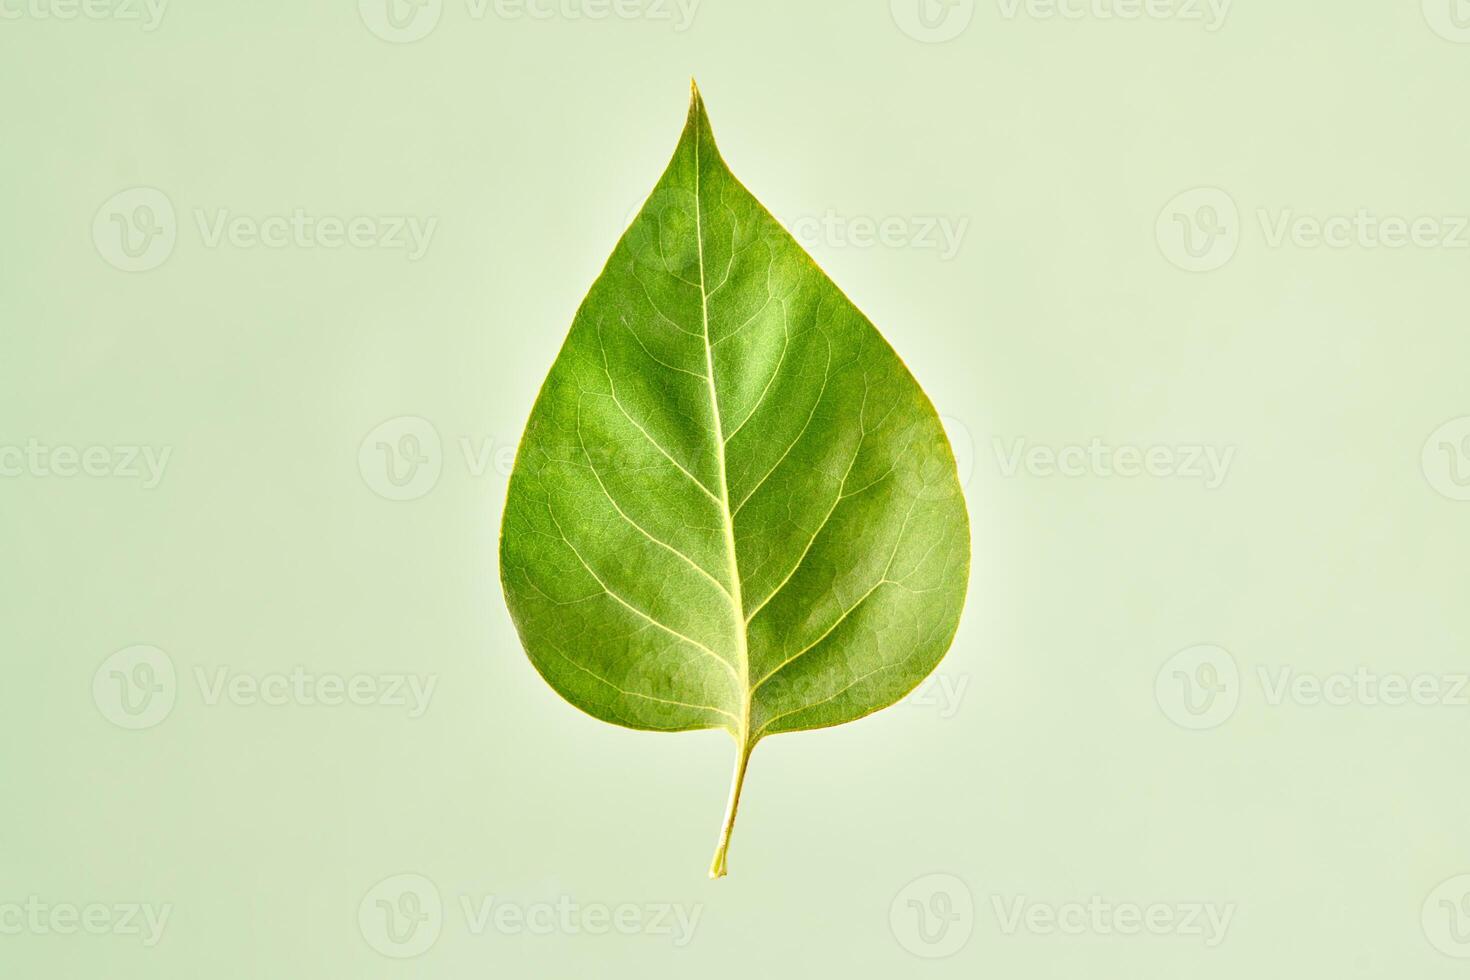 One green syringa tree leaf on light green background, detailed macro close up photo of liliac leaf